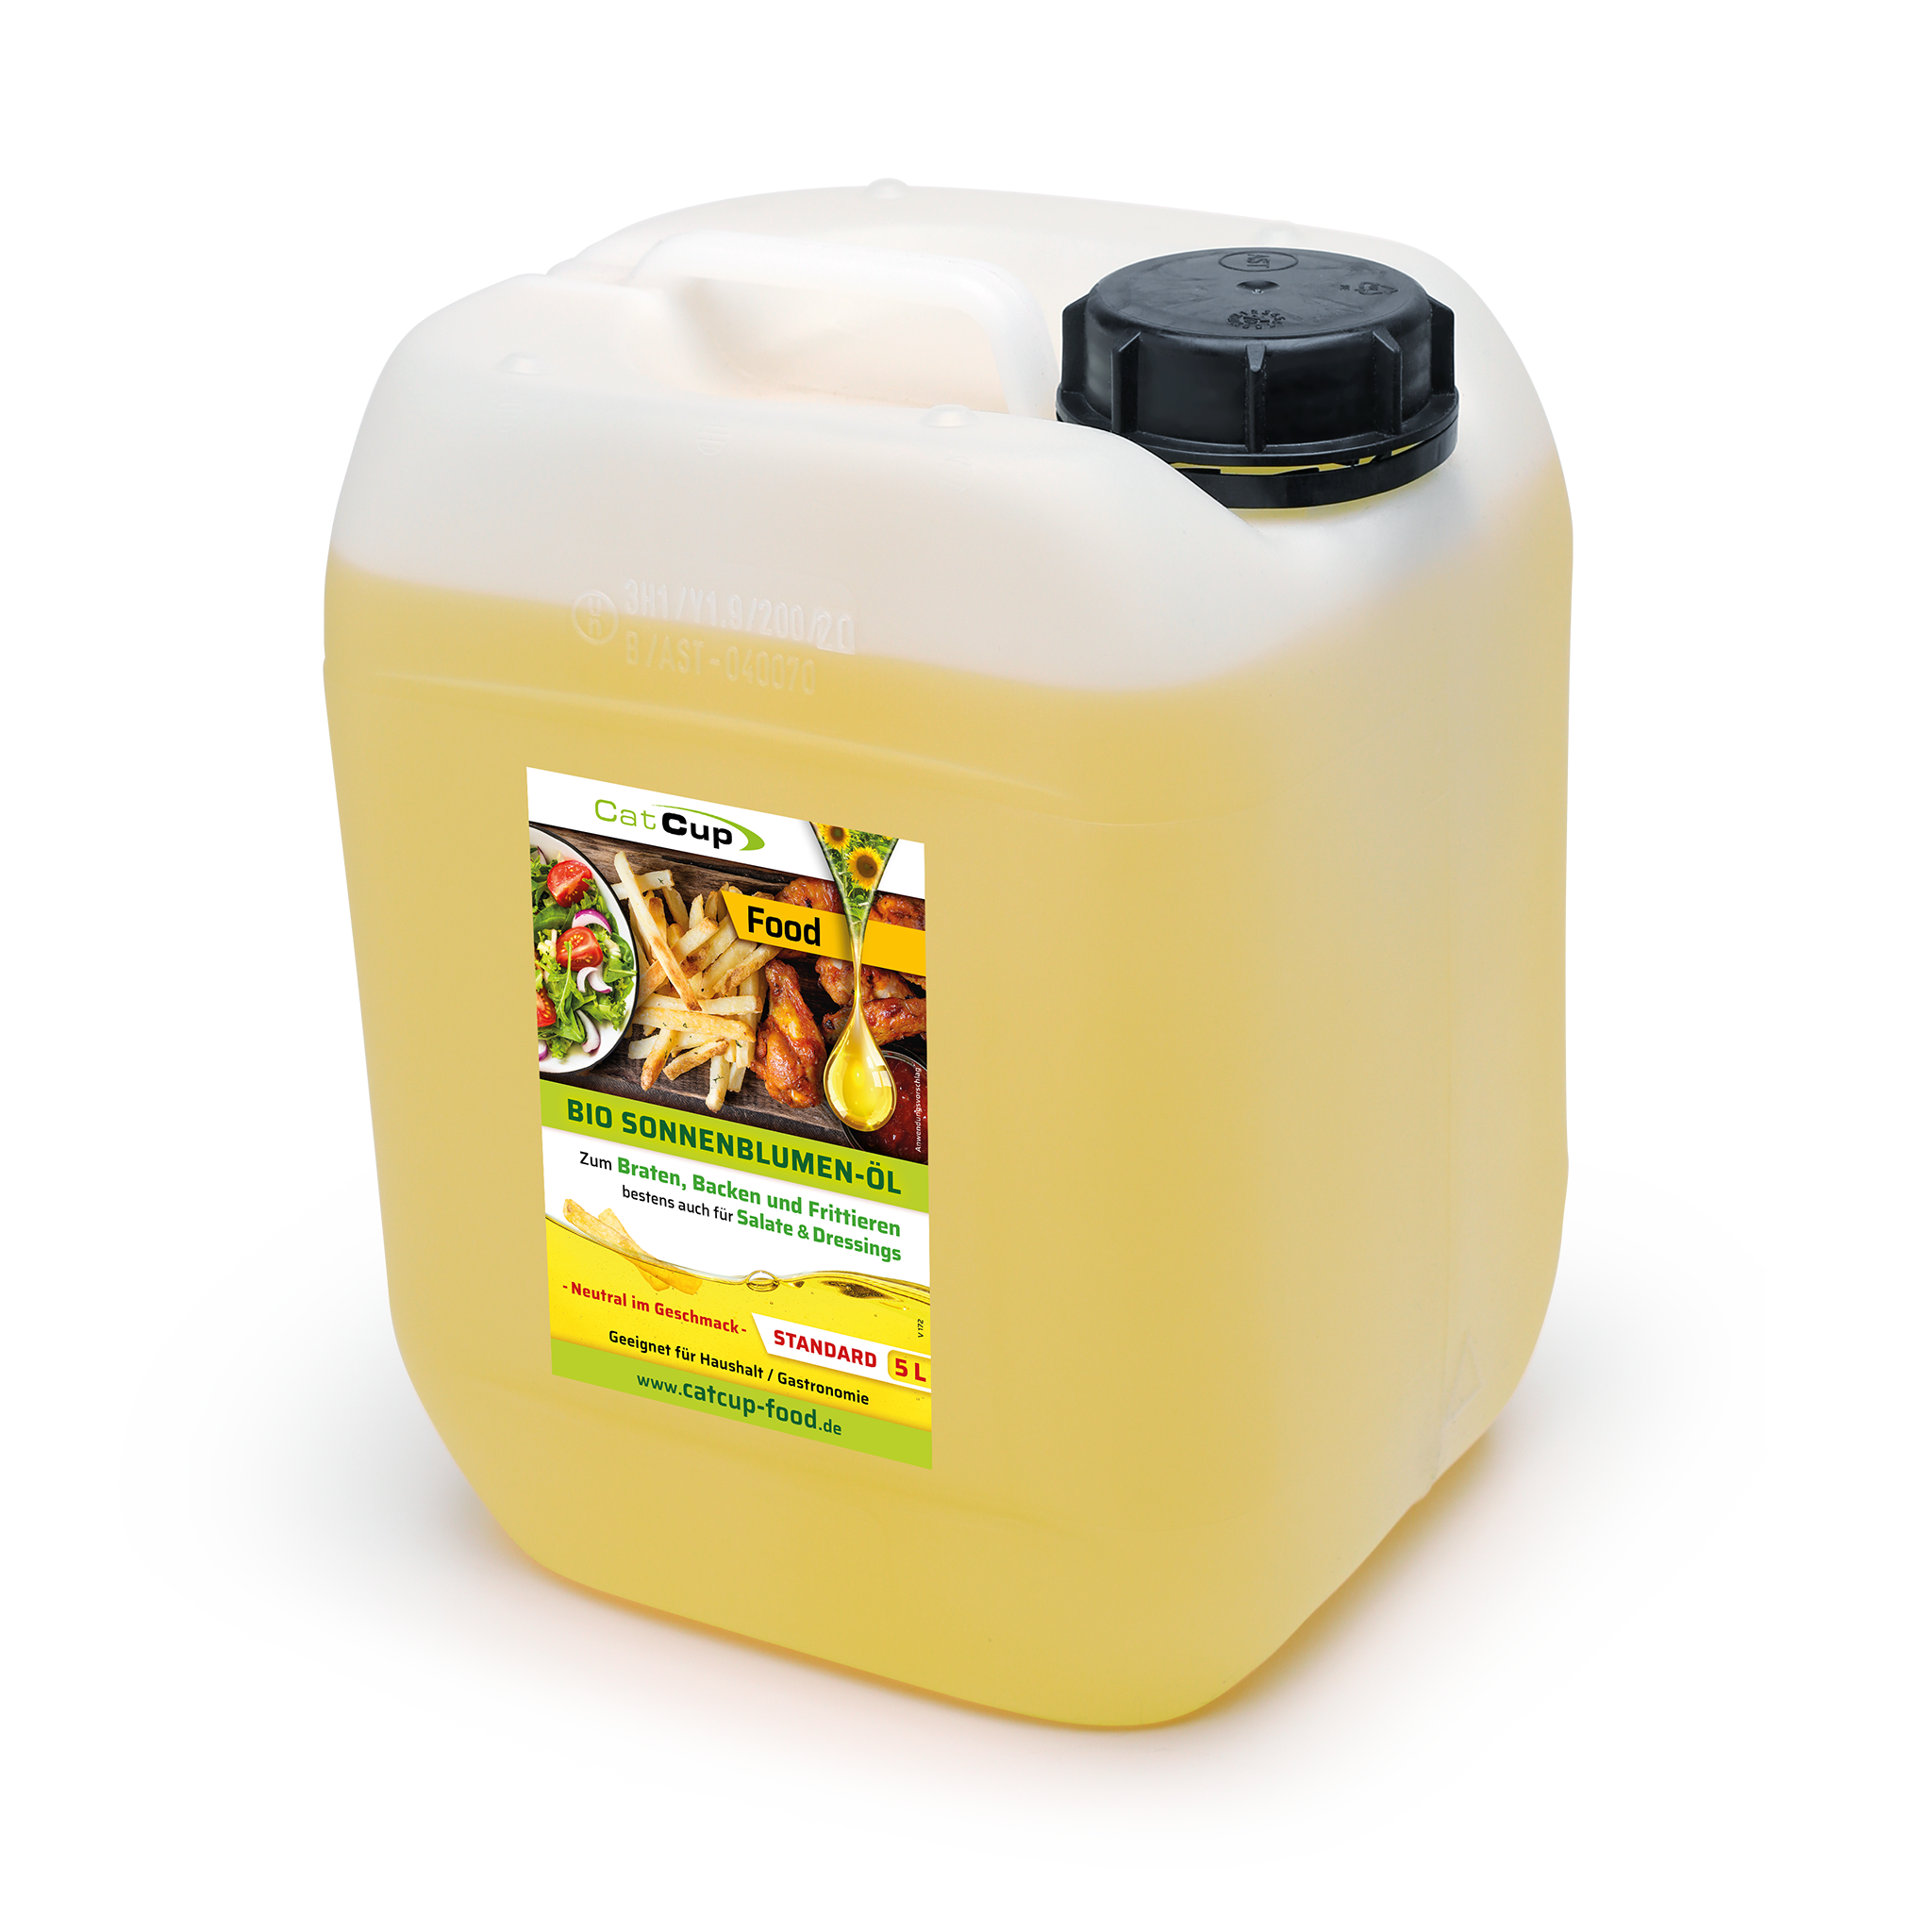 CatCup BIO Brat & Salat Öl (High Oleic), 100% Sonnenblumen Kerne (Standard)